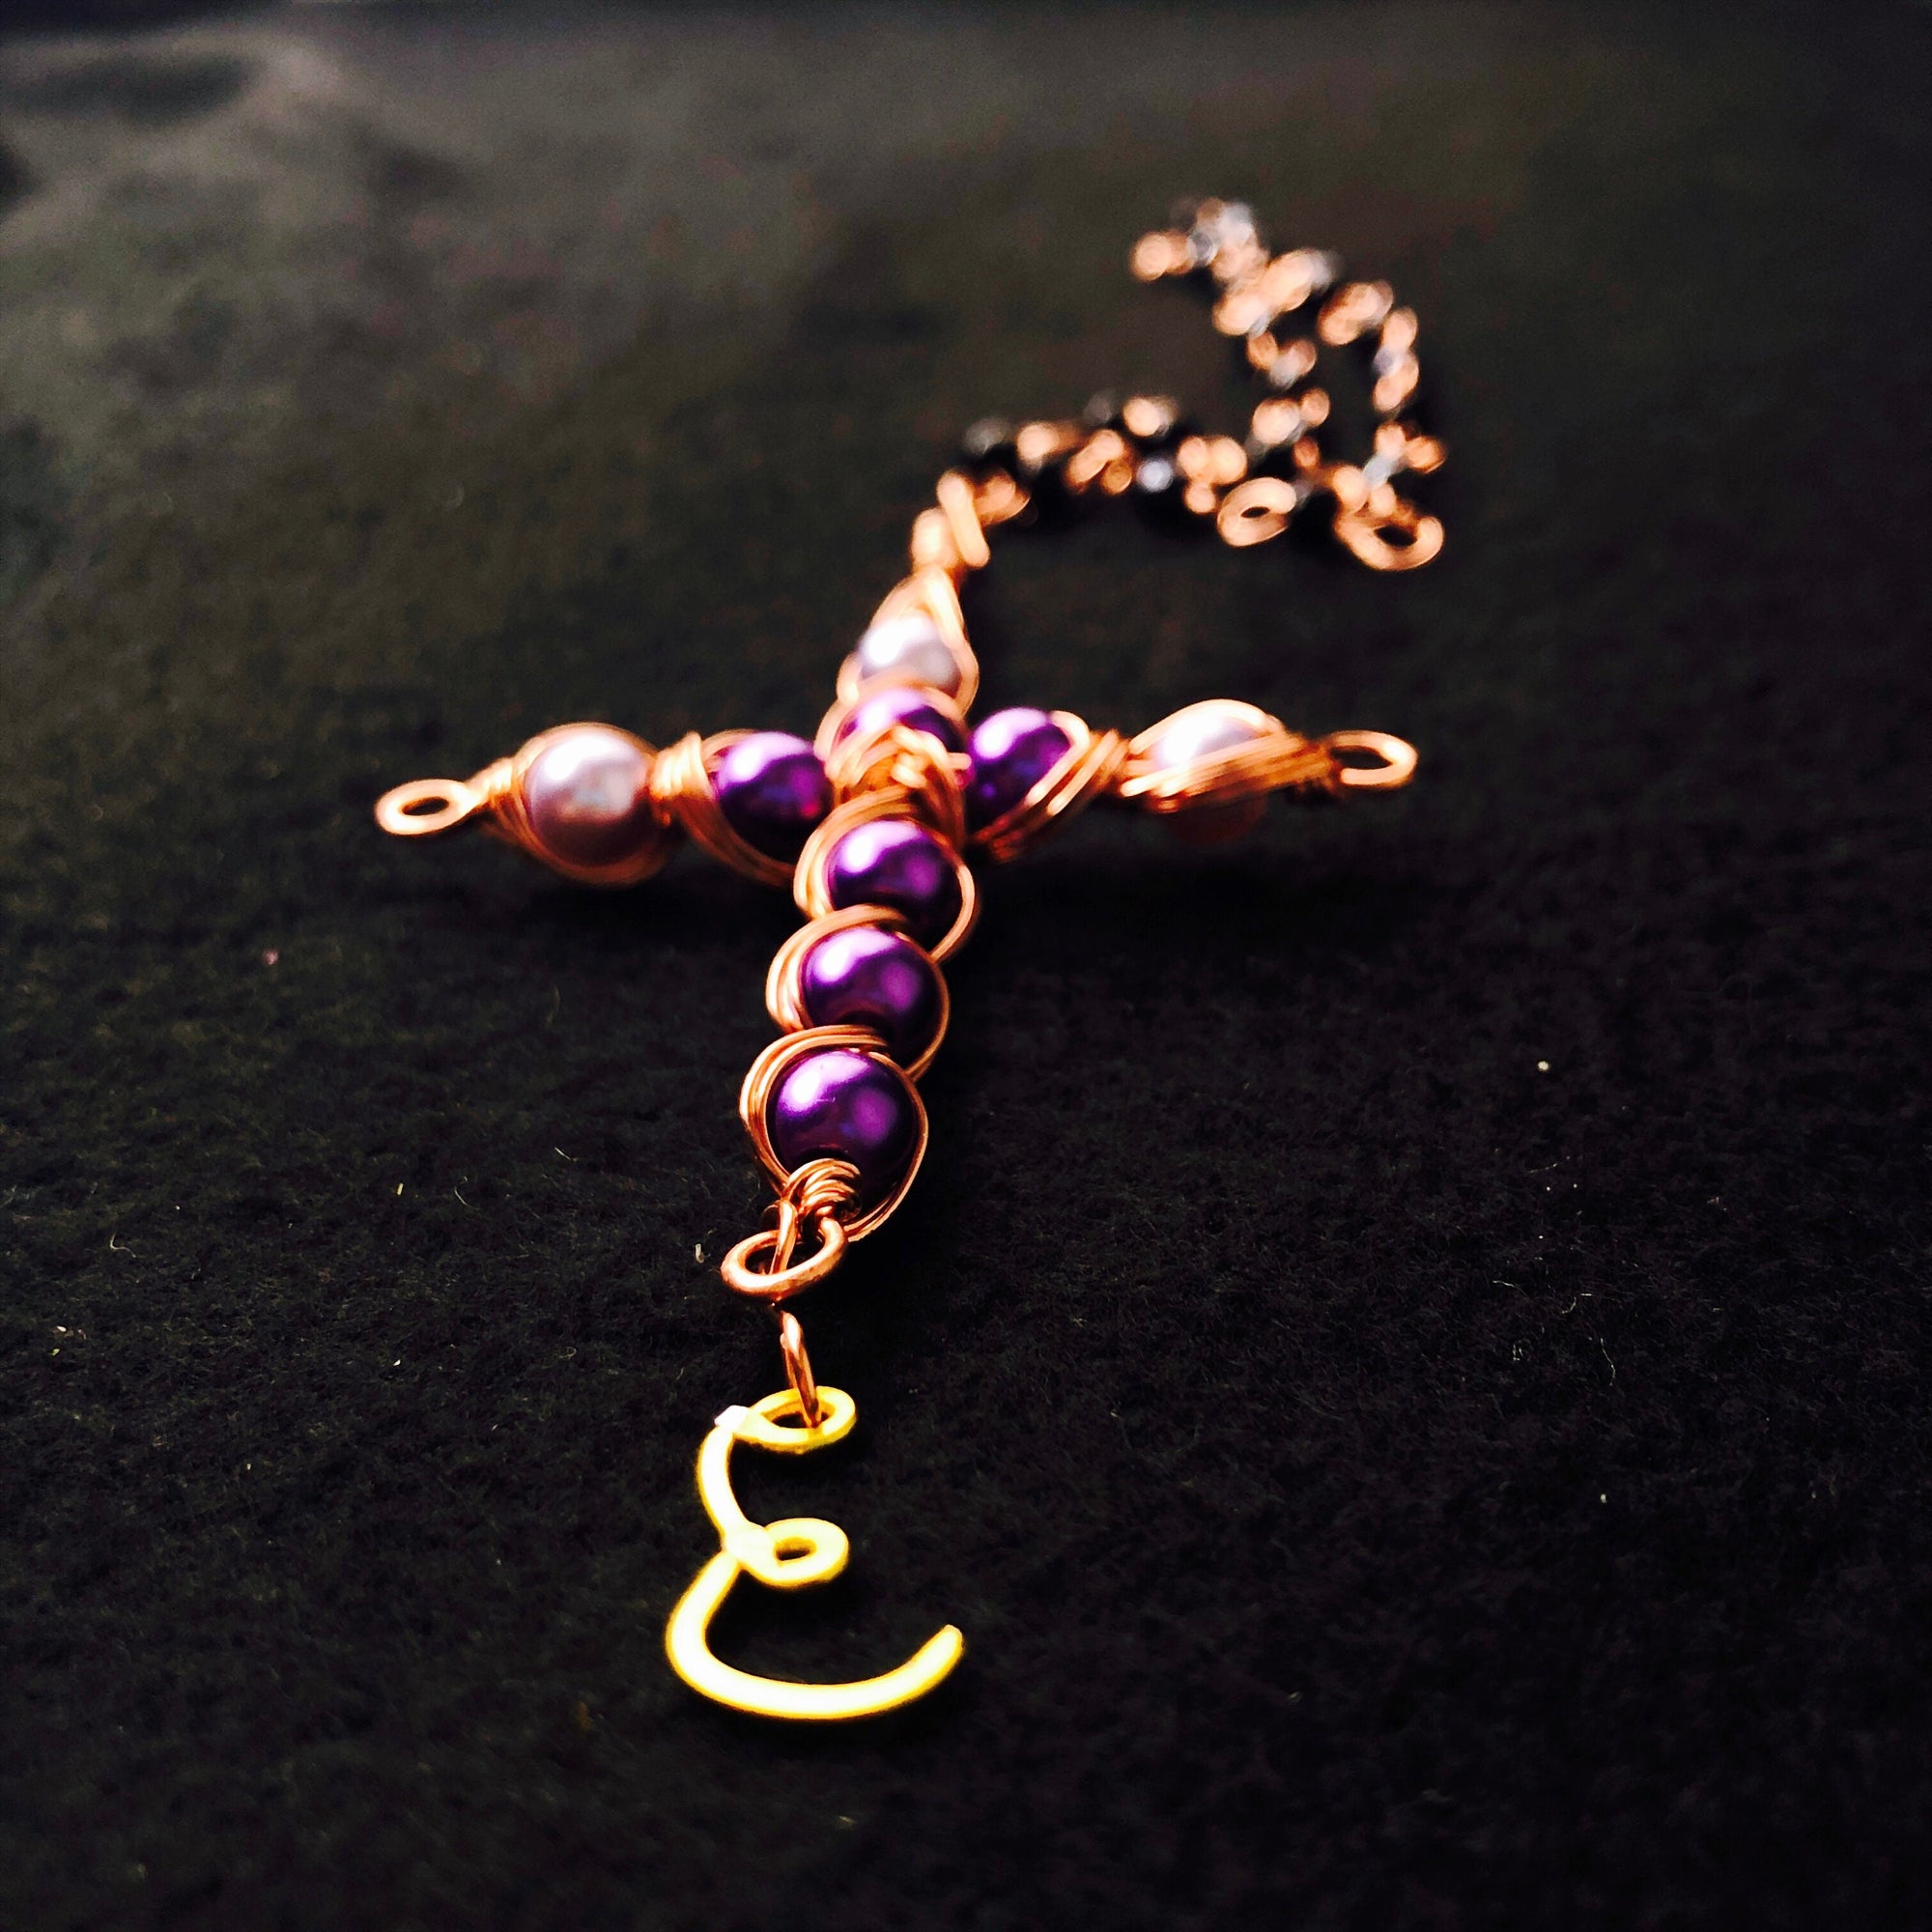 Handmade rosary crucifix for rosary beaded chain • Rose gold rosary chain cross rosary beads • Crucifix catholic rosary • Prayer beads